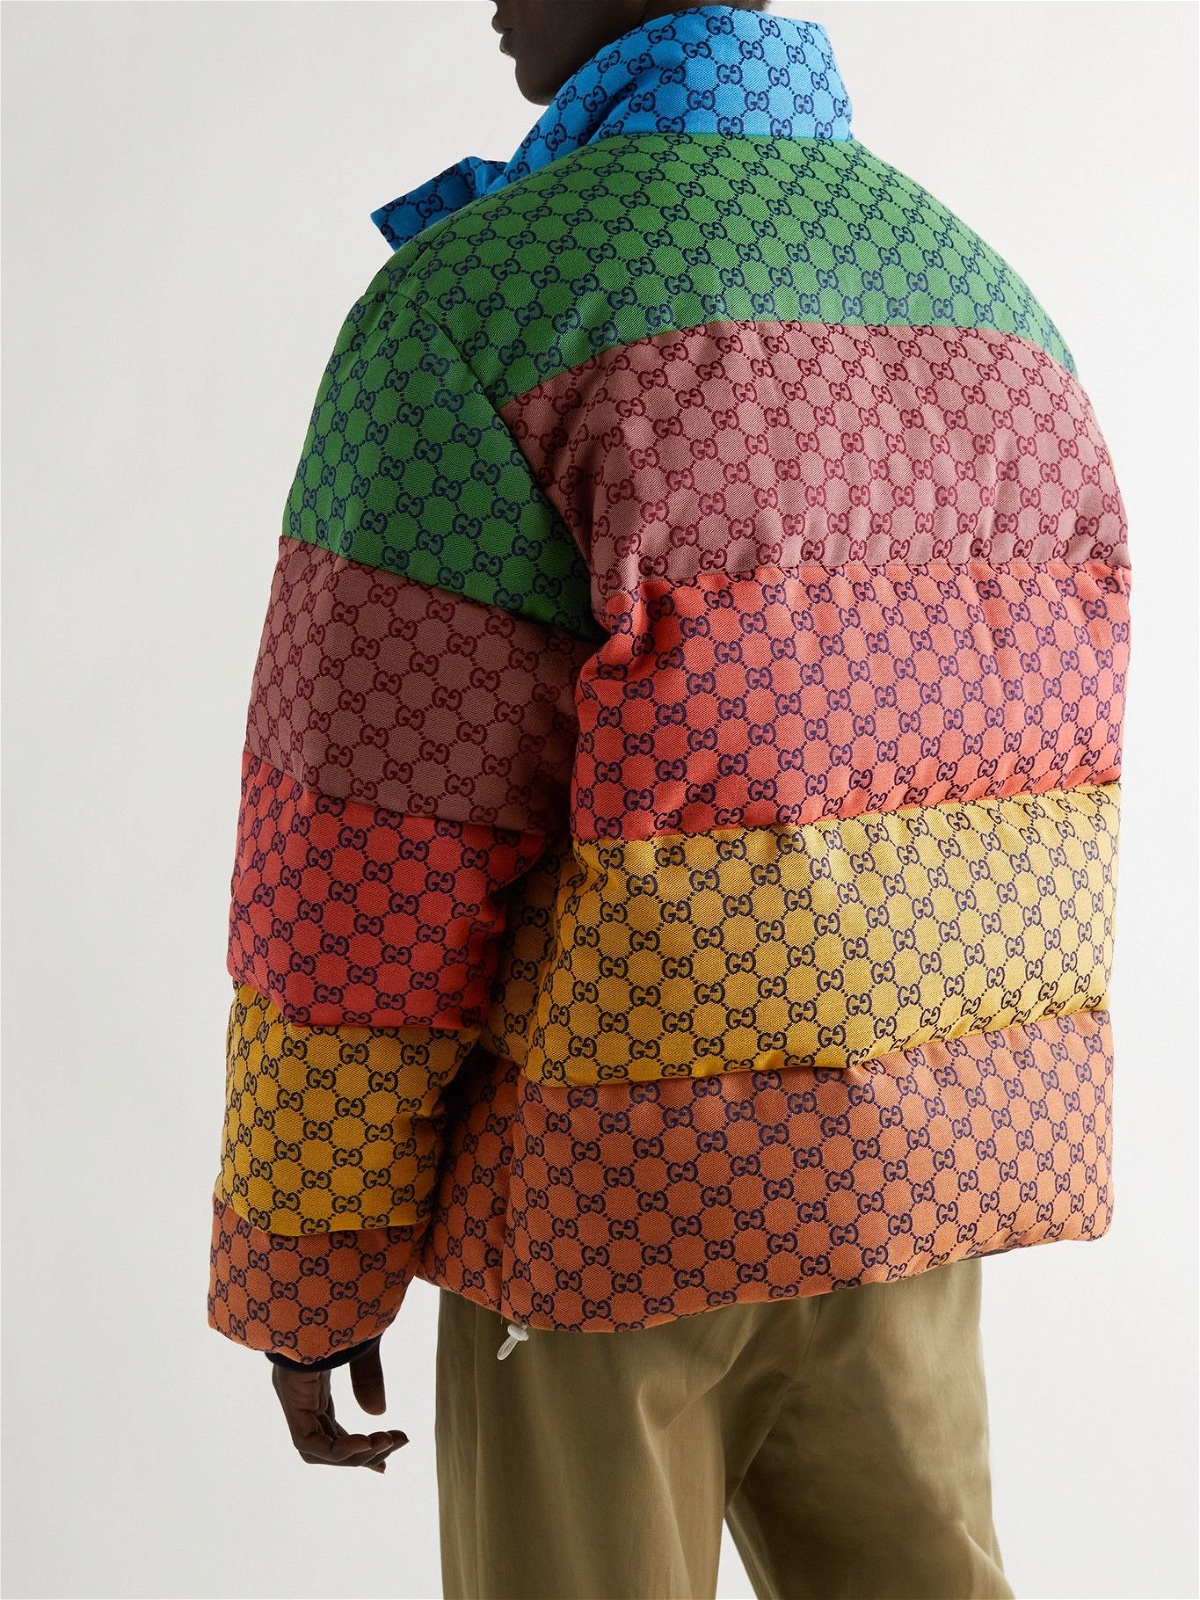 Gucci Striped Logo-jacquard Cotton-blend Canvas Down Jacket for Men